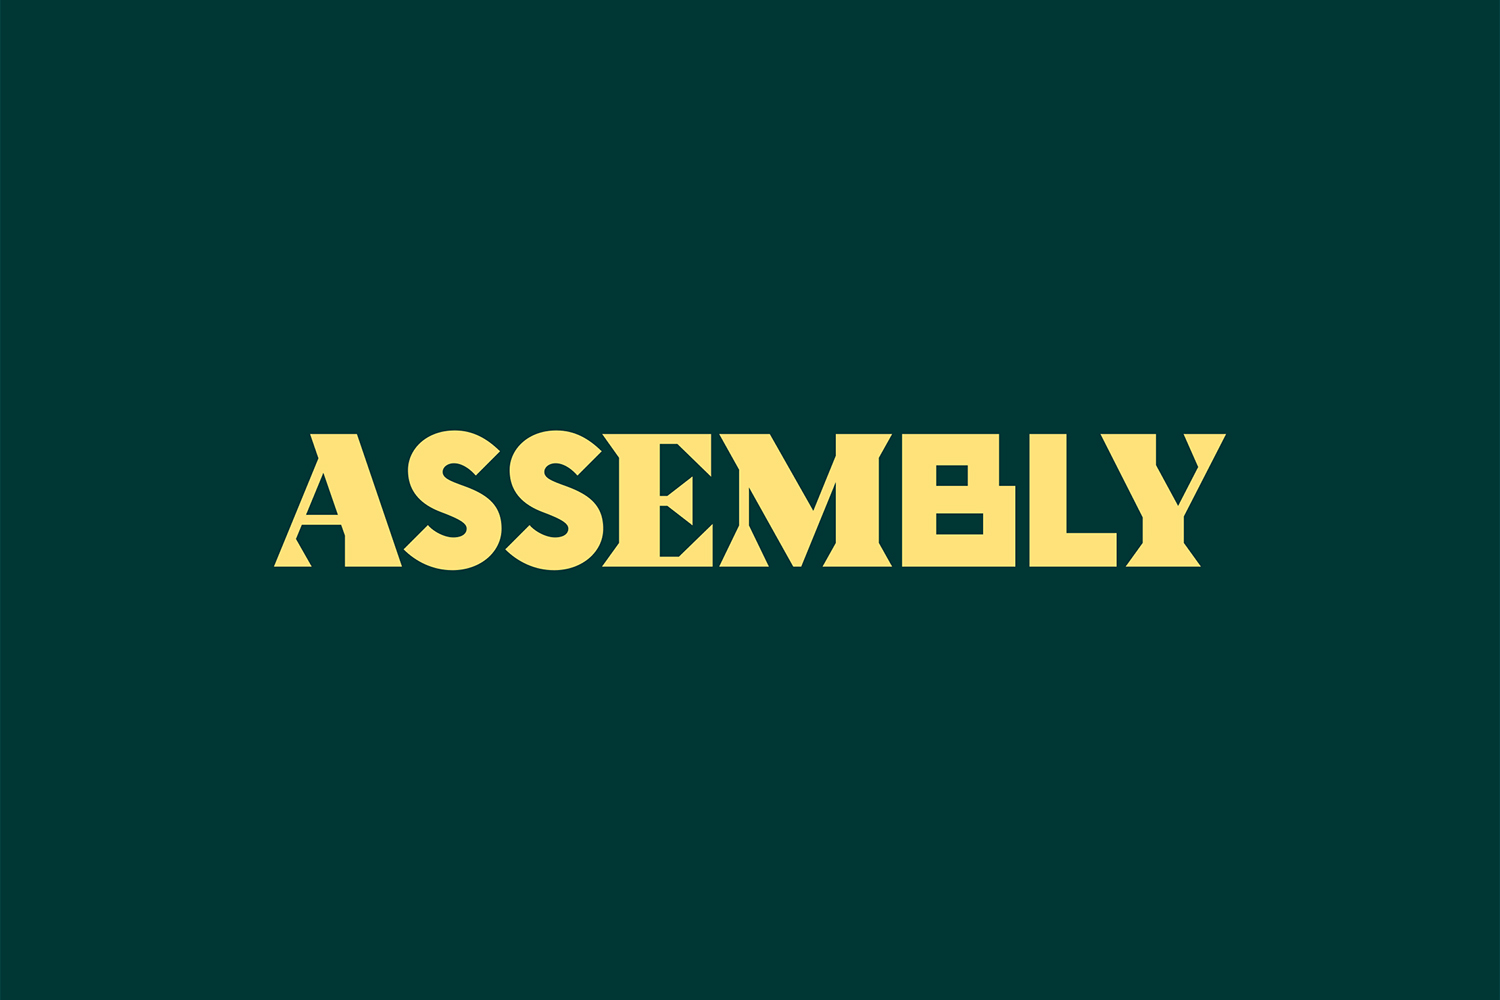 Assembly Hotel Branding